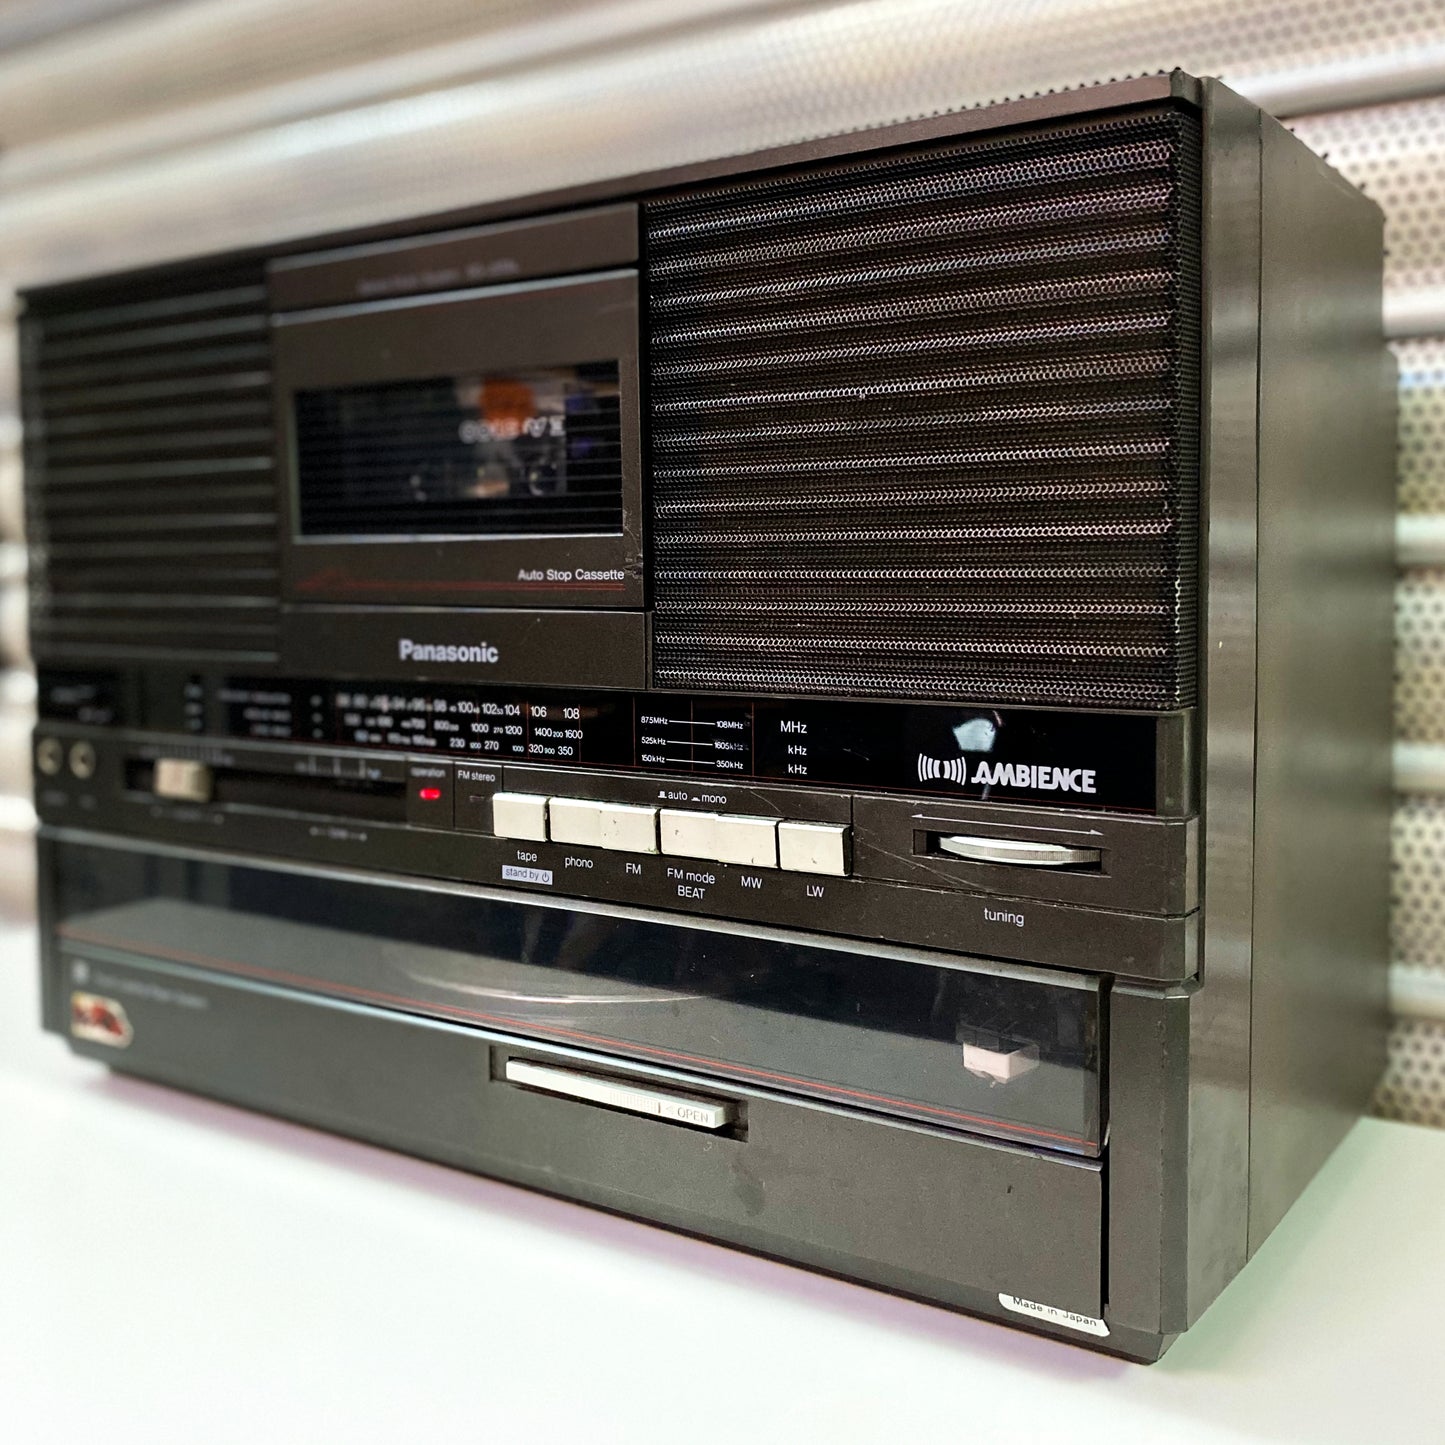 Panasonic SG-J555L Boombox (Turntable / Cassette / Tuner)